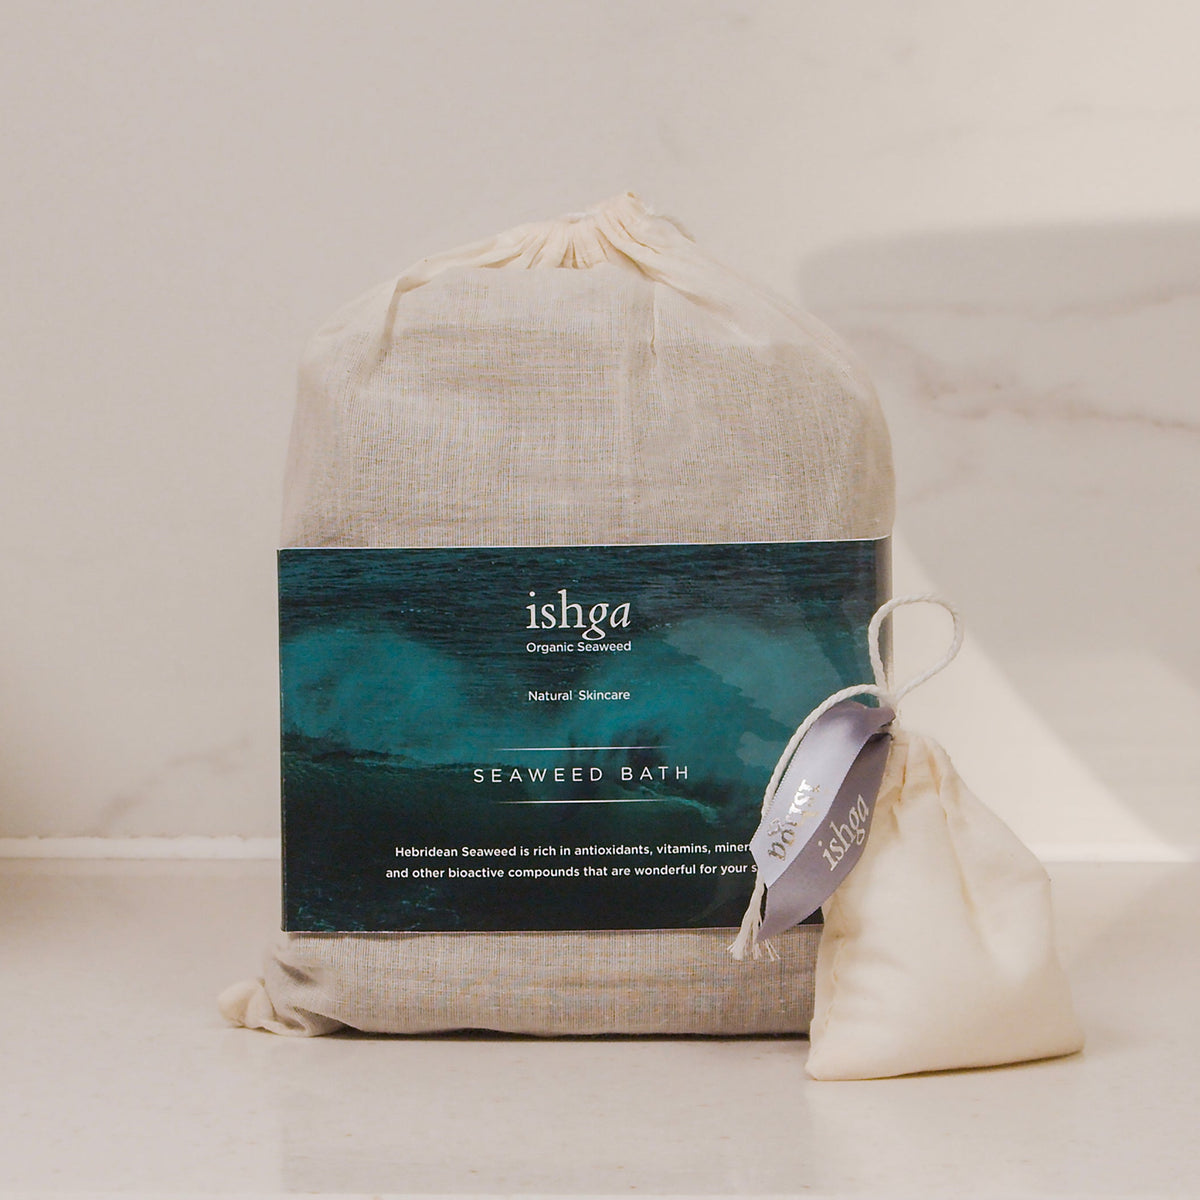 ishga Seaweed Bath and a small bag of ishga invigorating Bath Salts